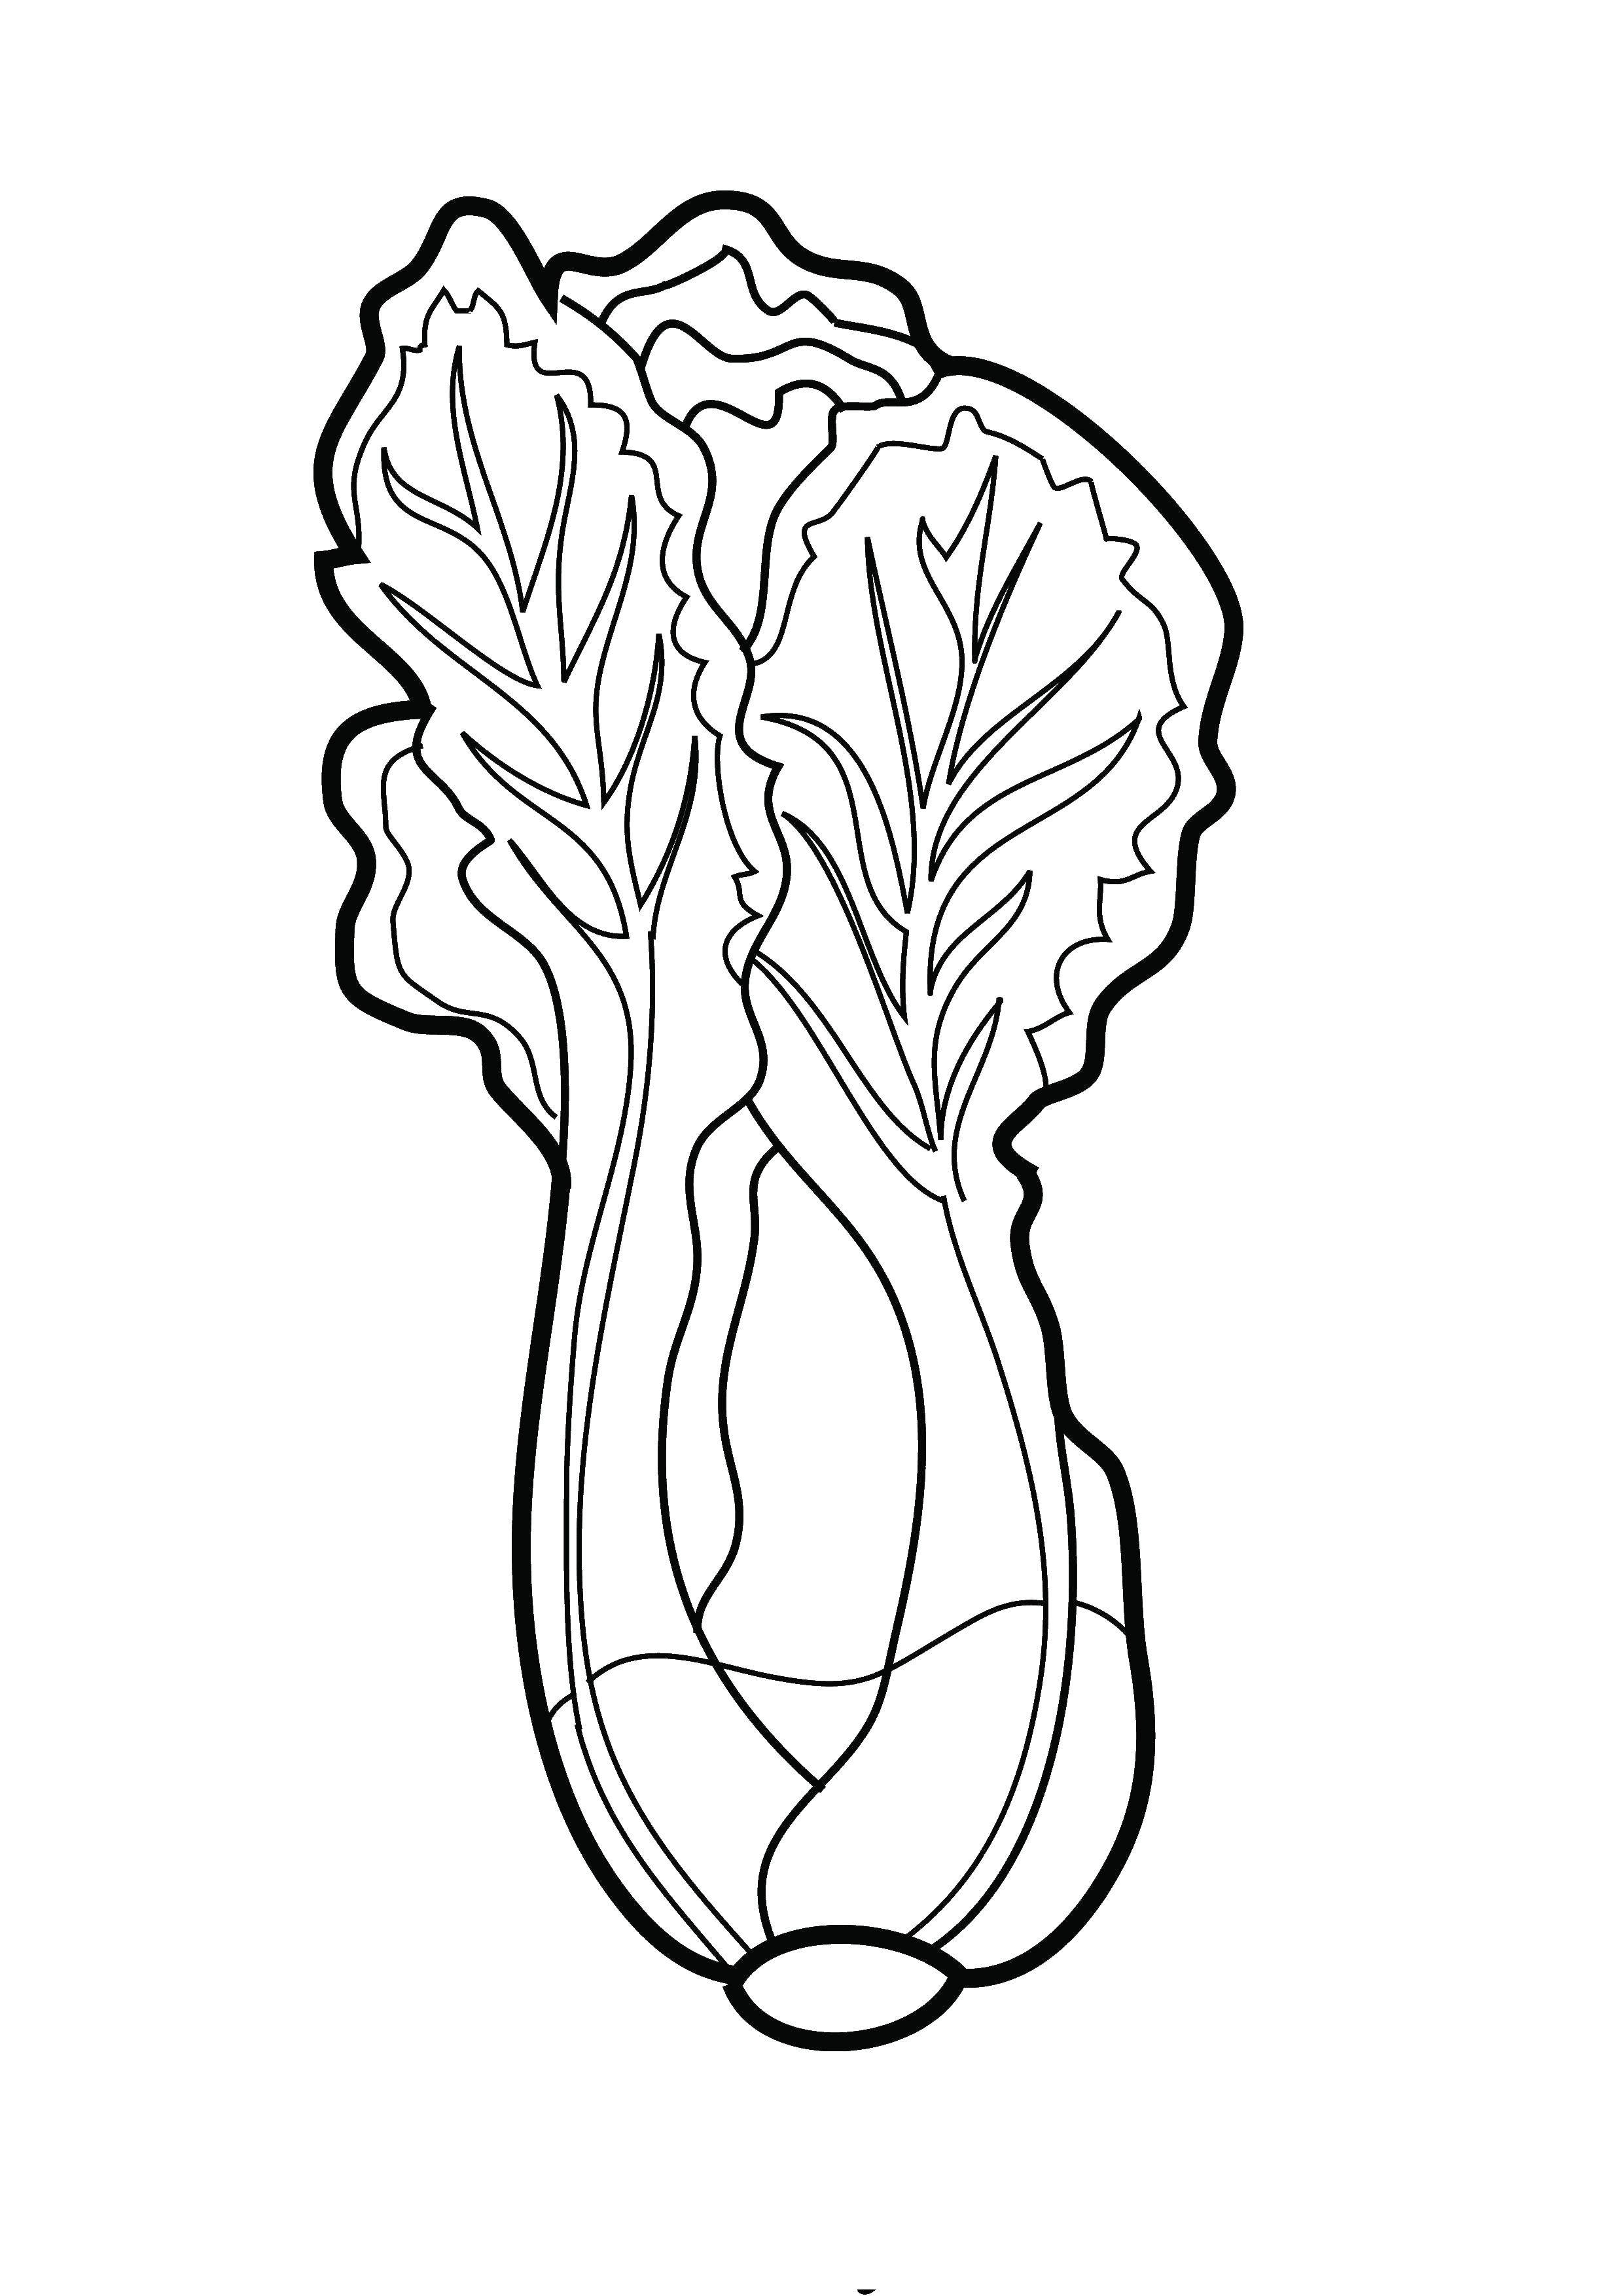 Название: Раскраска Листья салата. Категория: Растение. Теги: листья, салат, Растение.